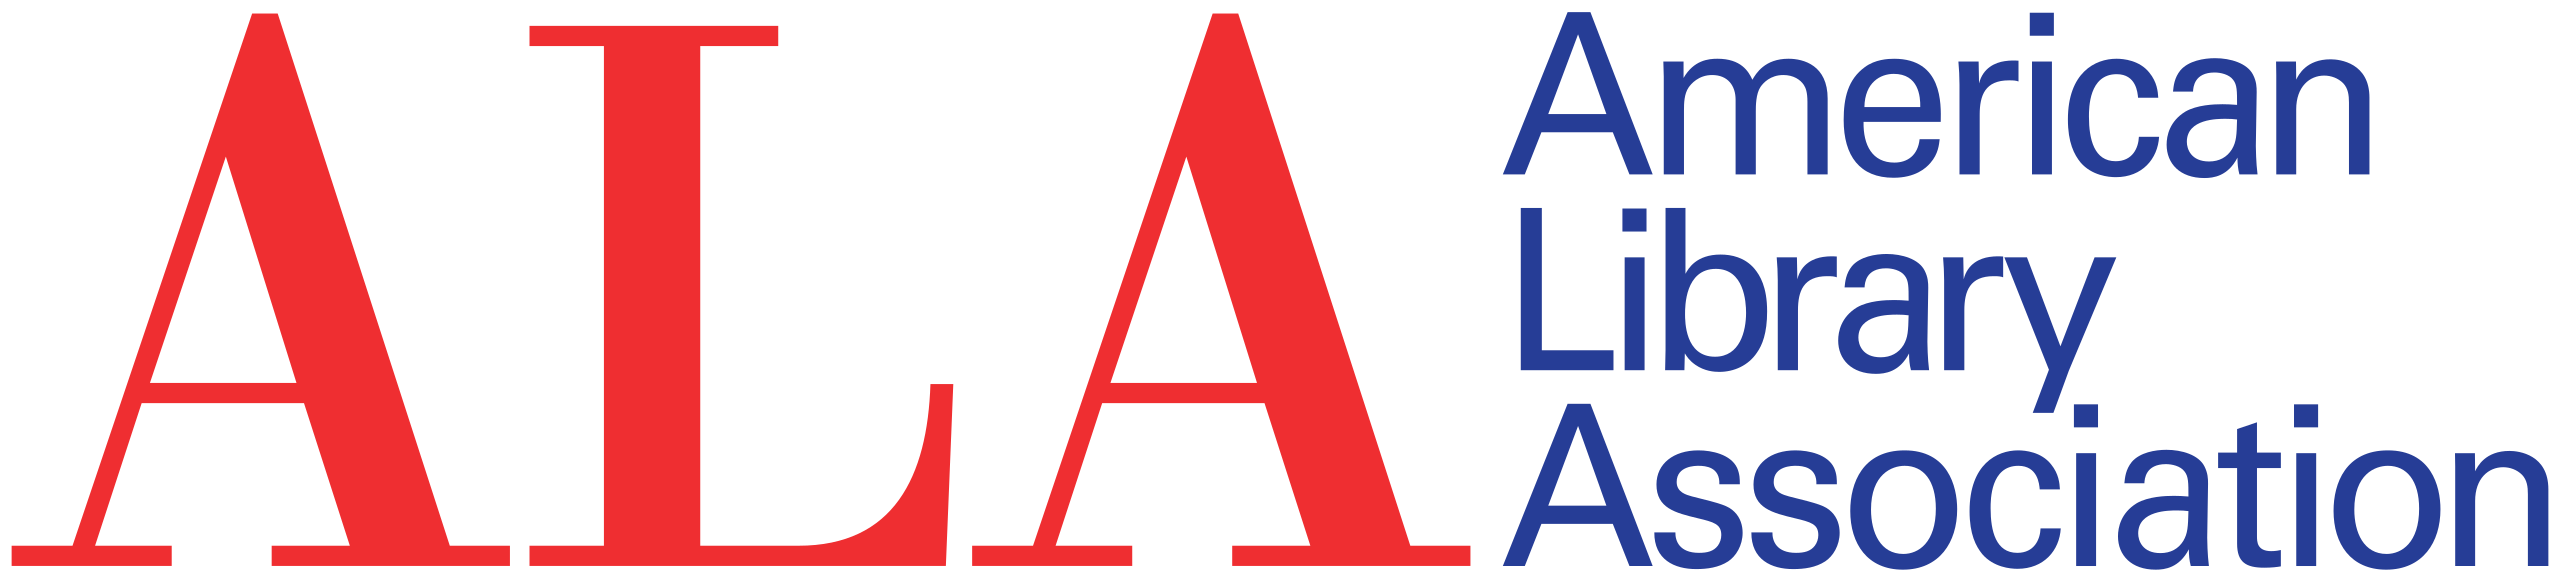 American library association logo